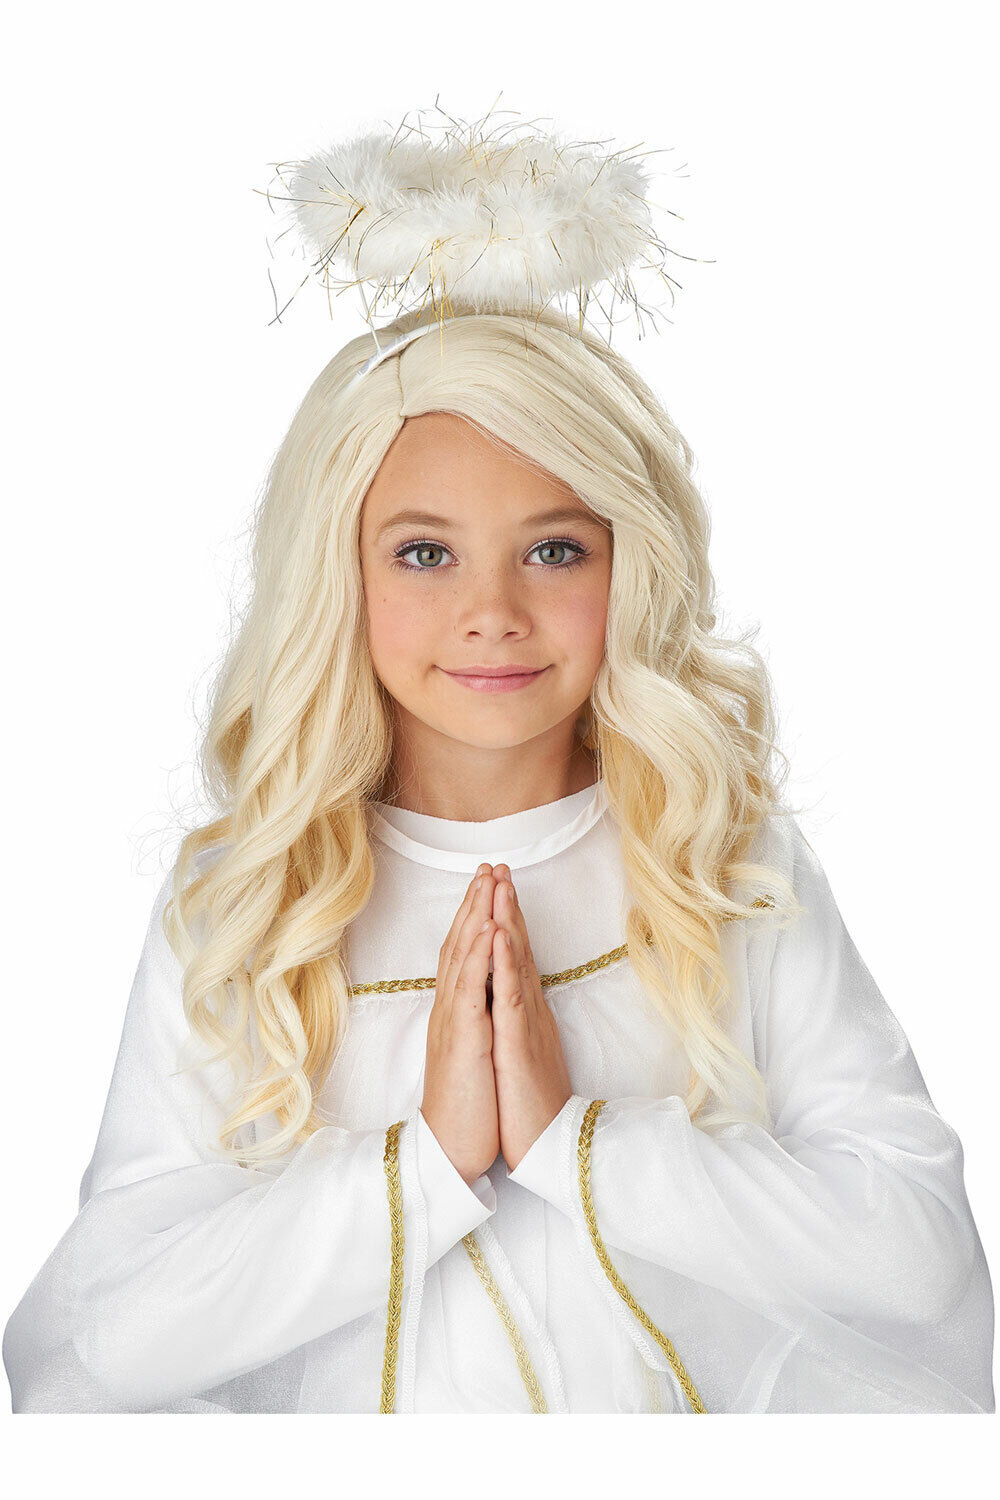 California Costume GOLDEN ANGEL WIG/CHILD Child Girls Halloween Wig 70953